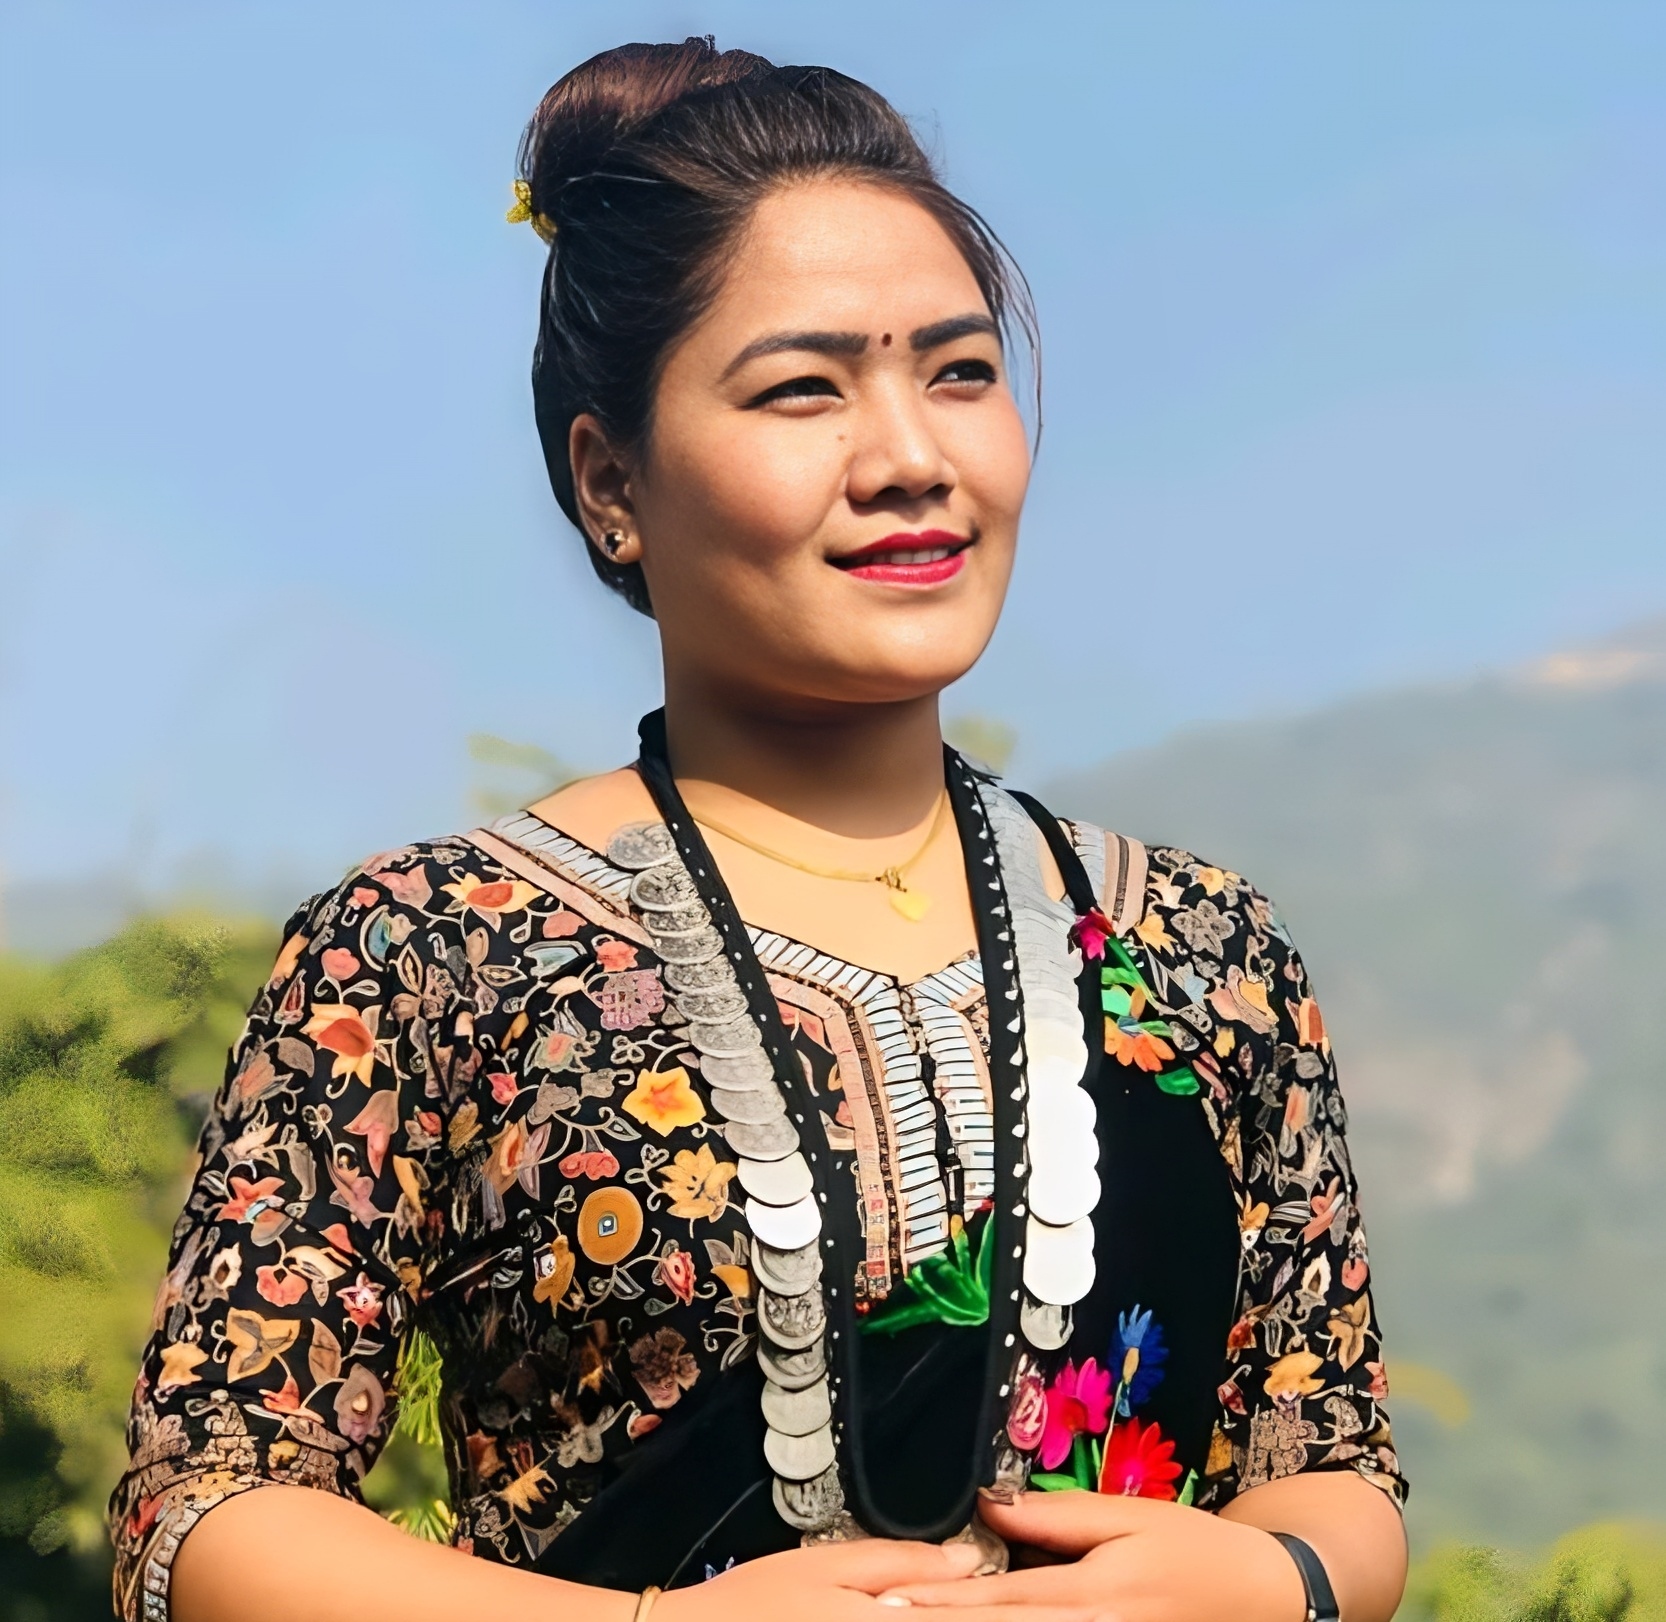 Nepal mourns the loss of beloved singer Nira Chantyal in plane crash